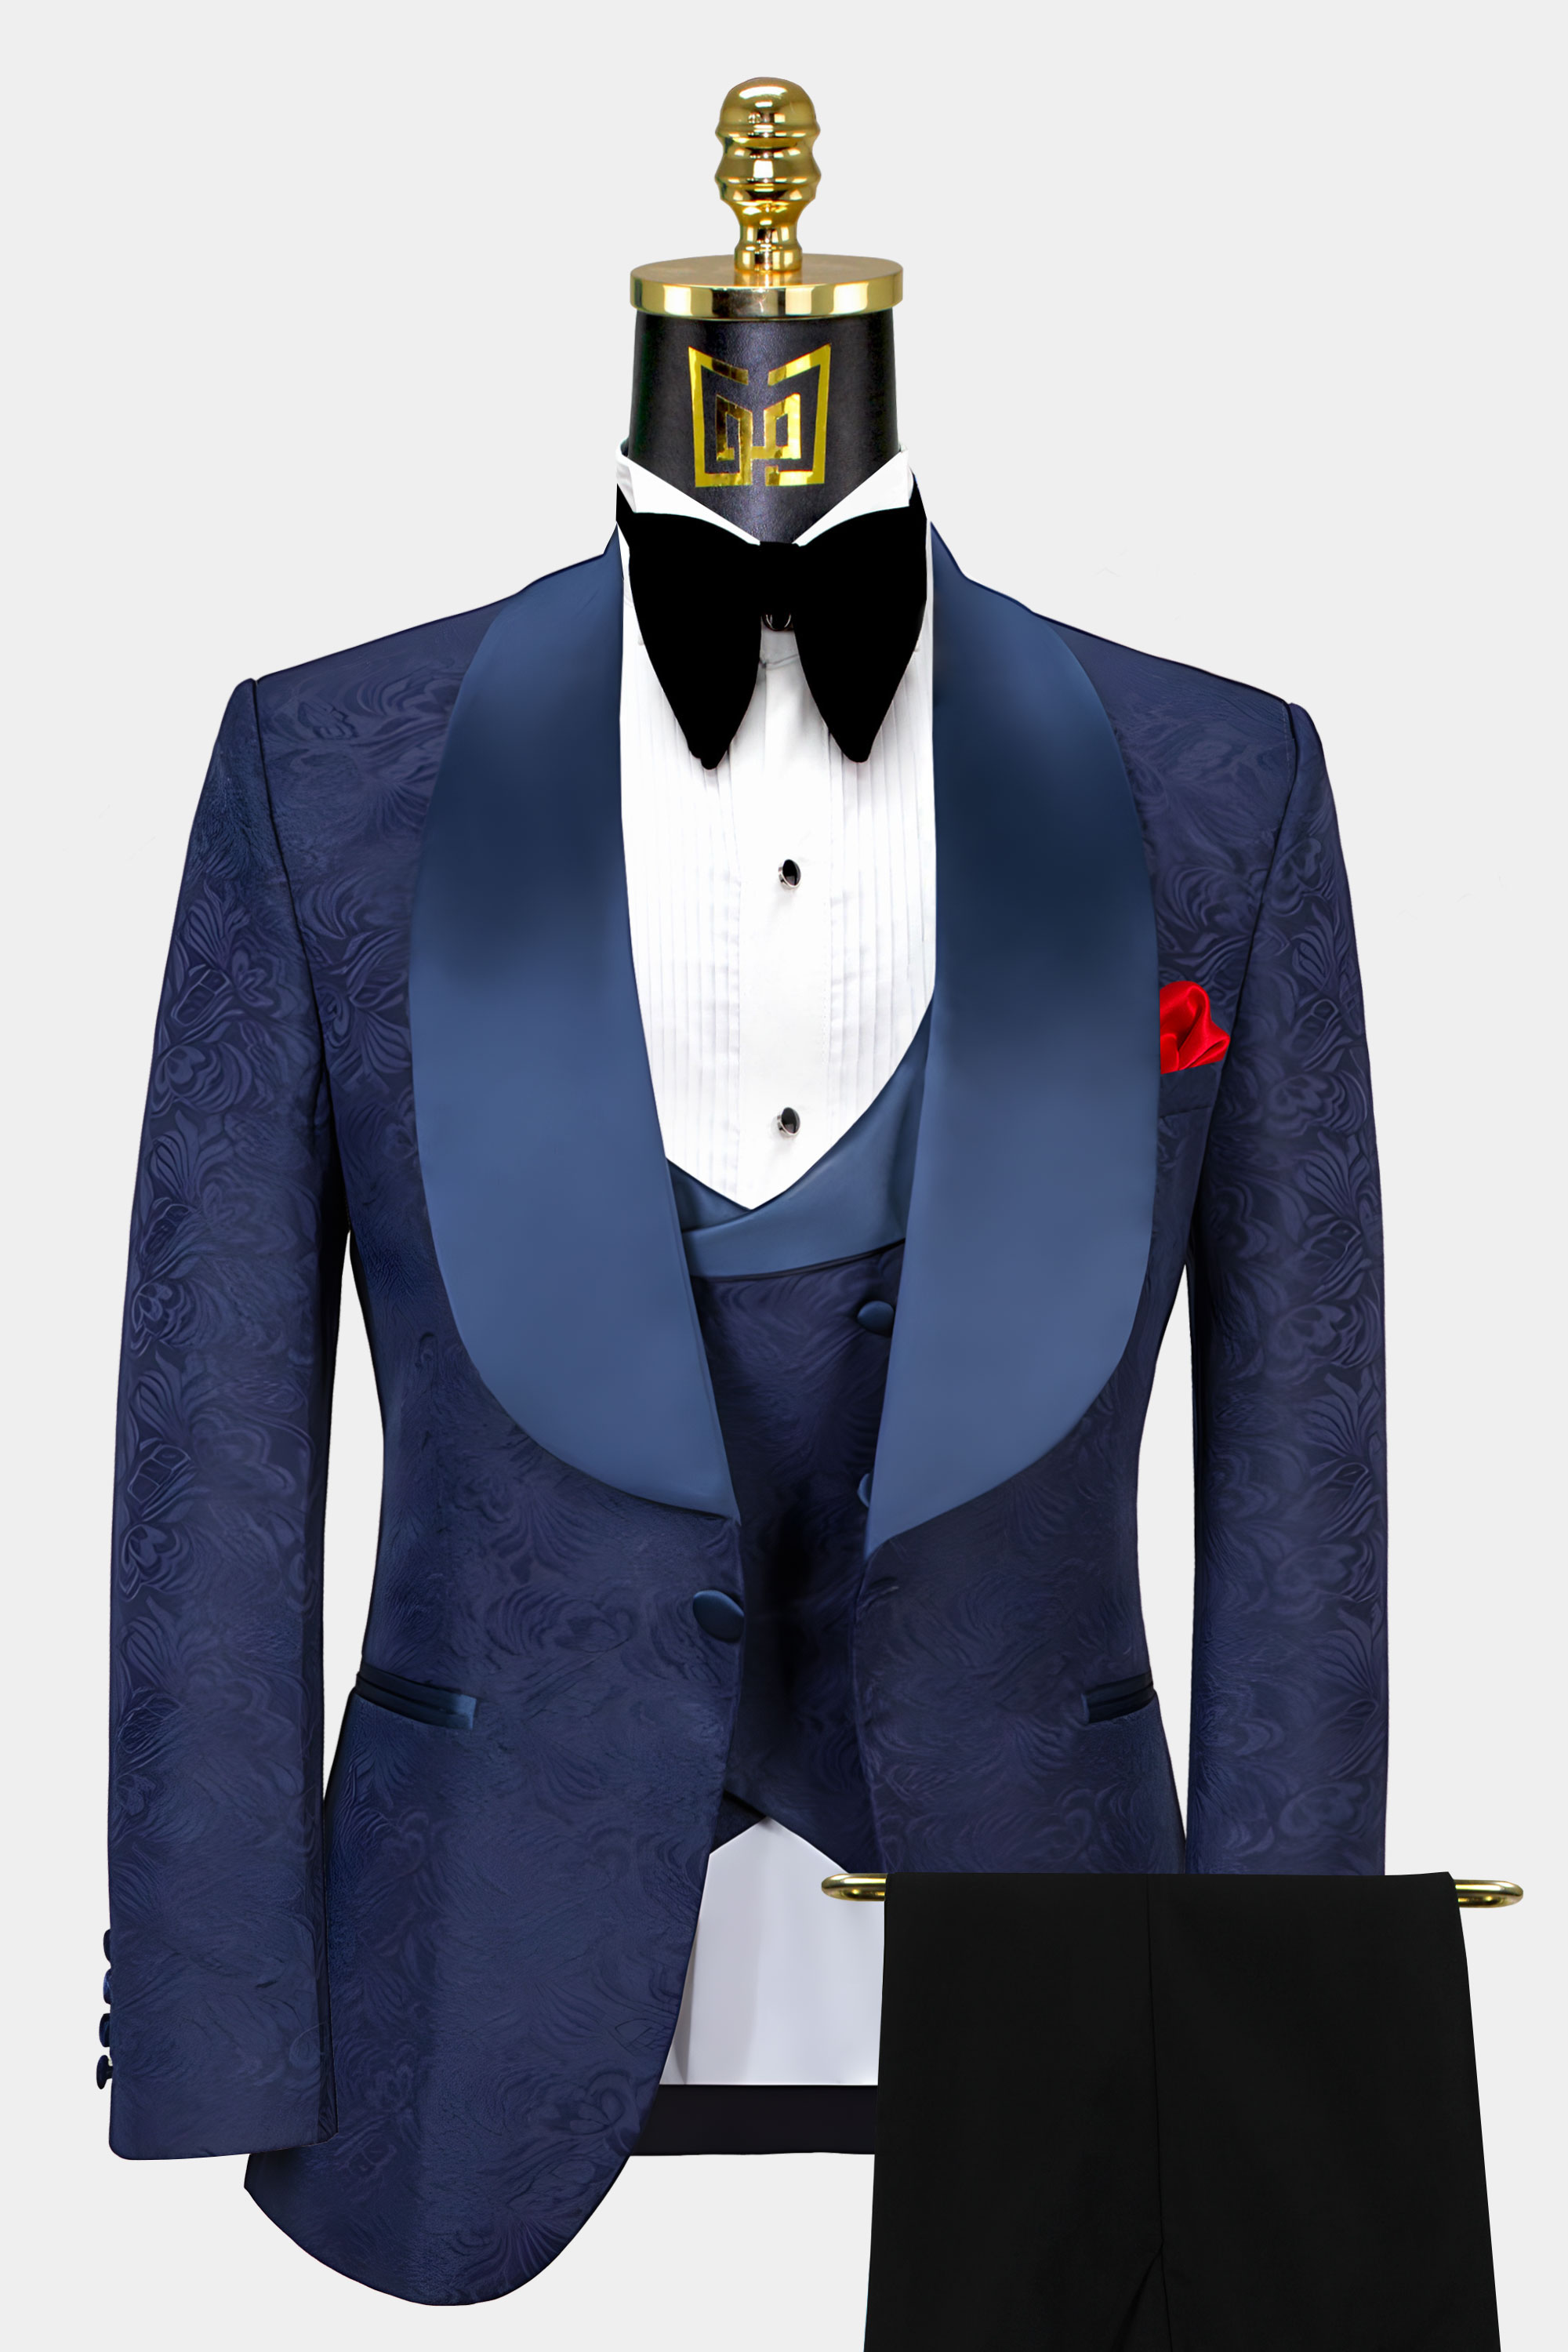 https://www.gentlemansguru.com/wp-content/uploads/2020/03/Navy-Blue-and-Black-Tuxedo-with-Shawl-Collar-Tuxedo-Suit-from-Gentlemansguru.com_.jpg